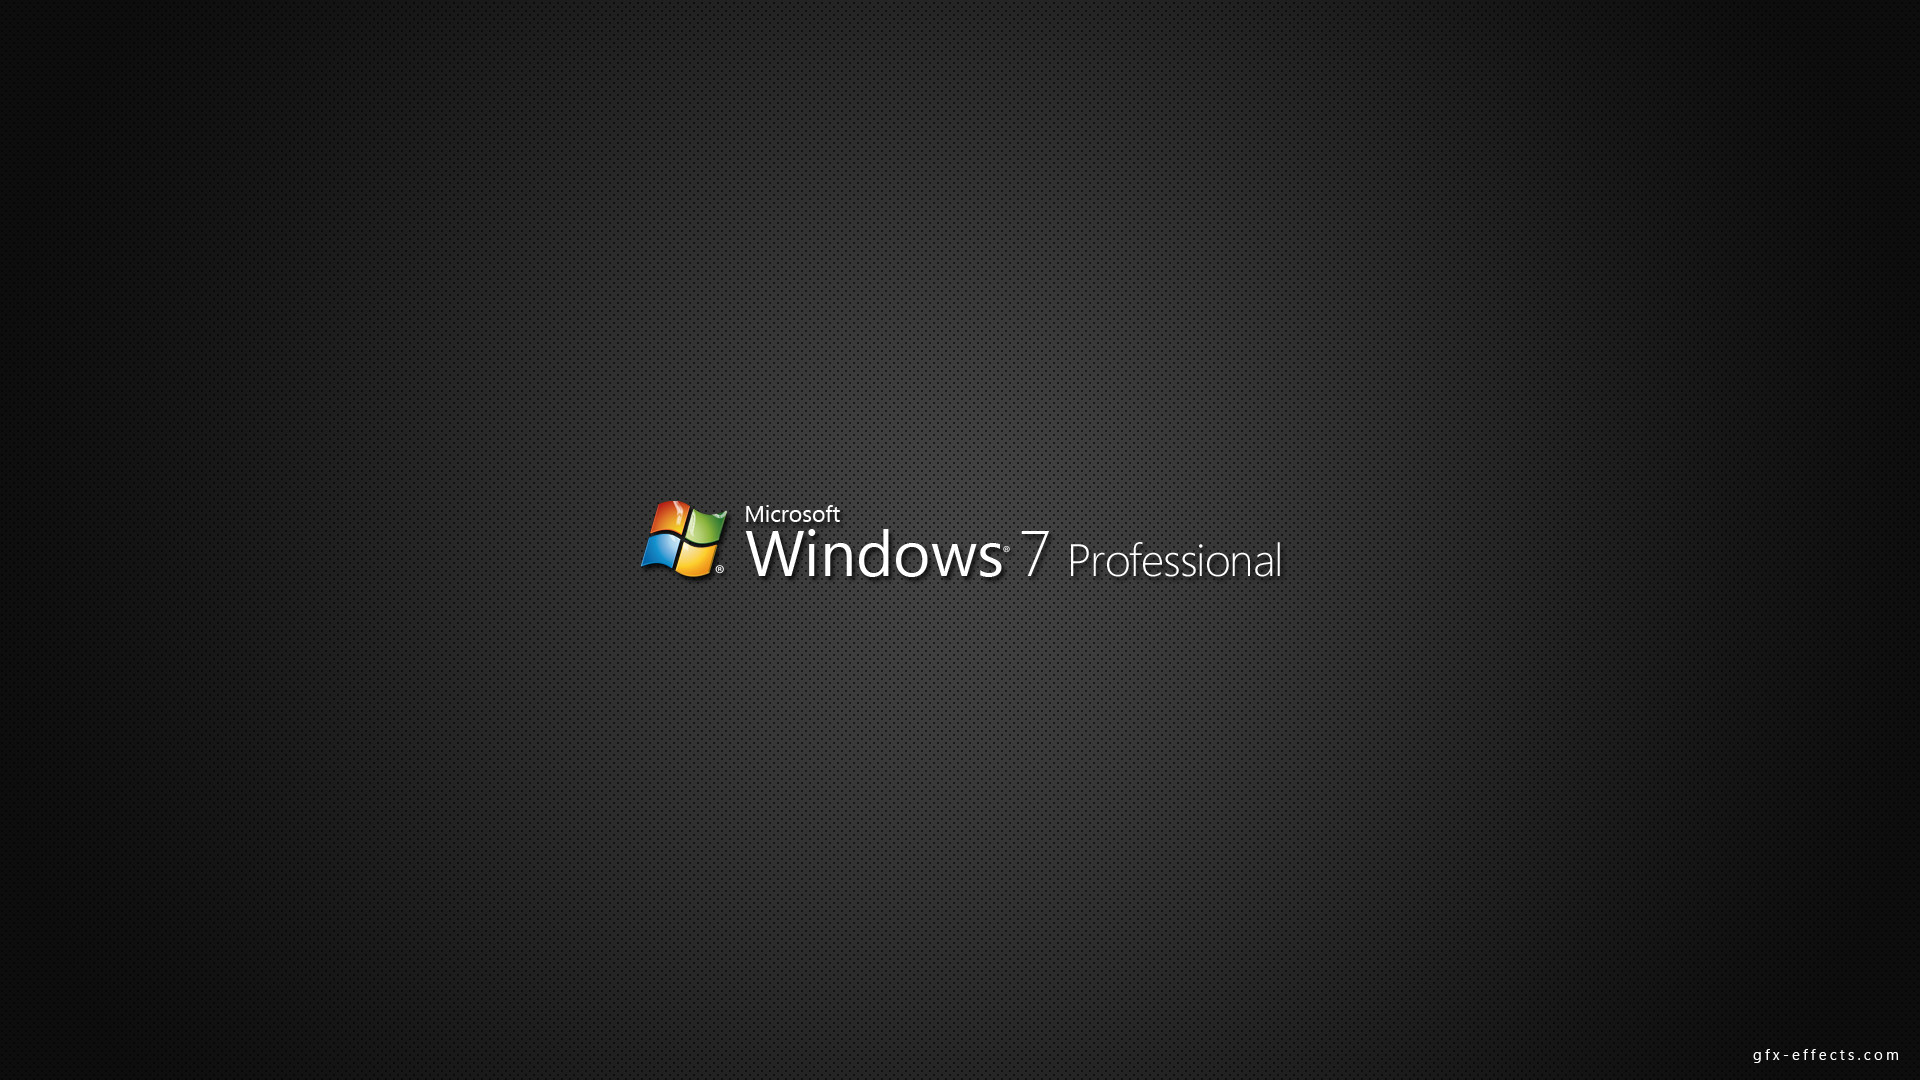 1920x1080 Dell Wallpaper Windows 7 Professional #6Z3384O, 1718.09 Kb